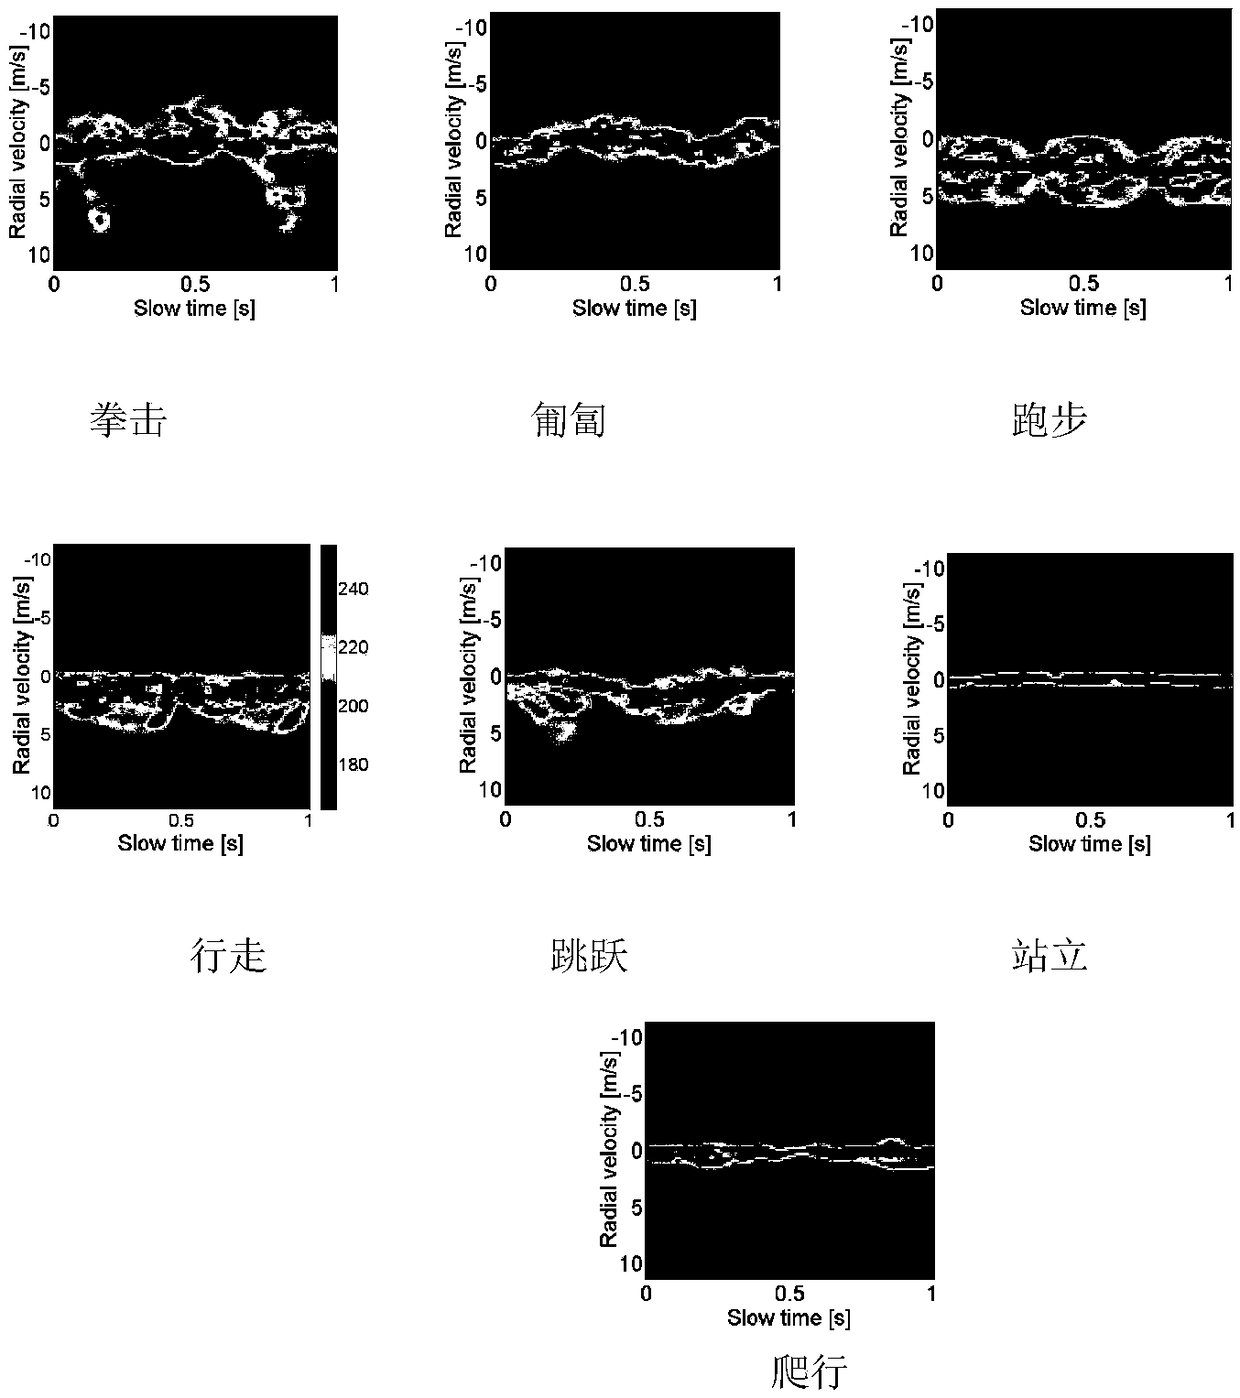 Deep convolutional adversarial neural network-based human body action radar image classification method